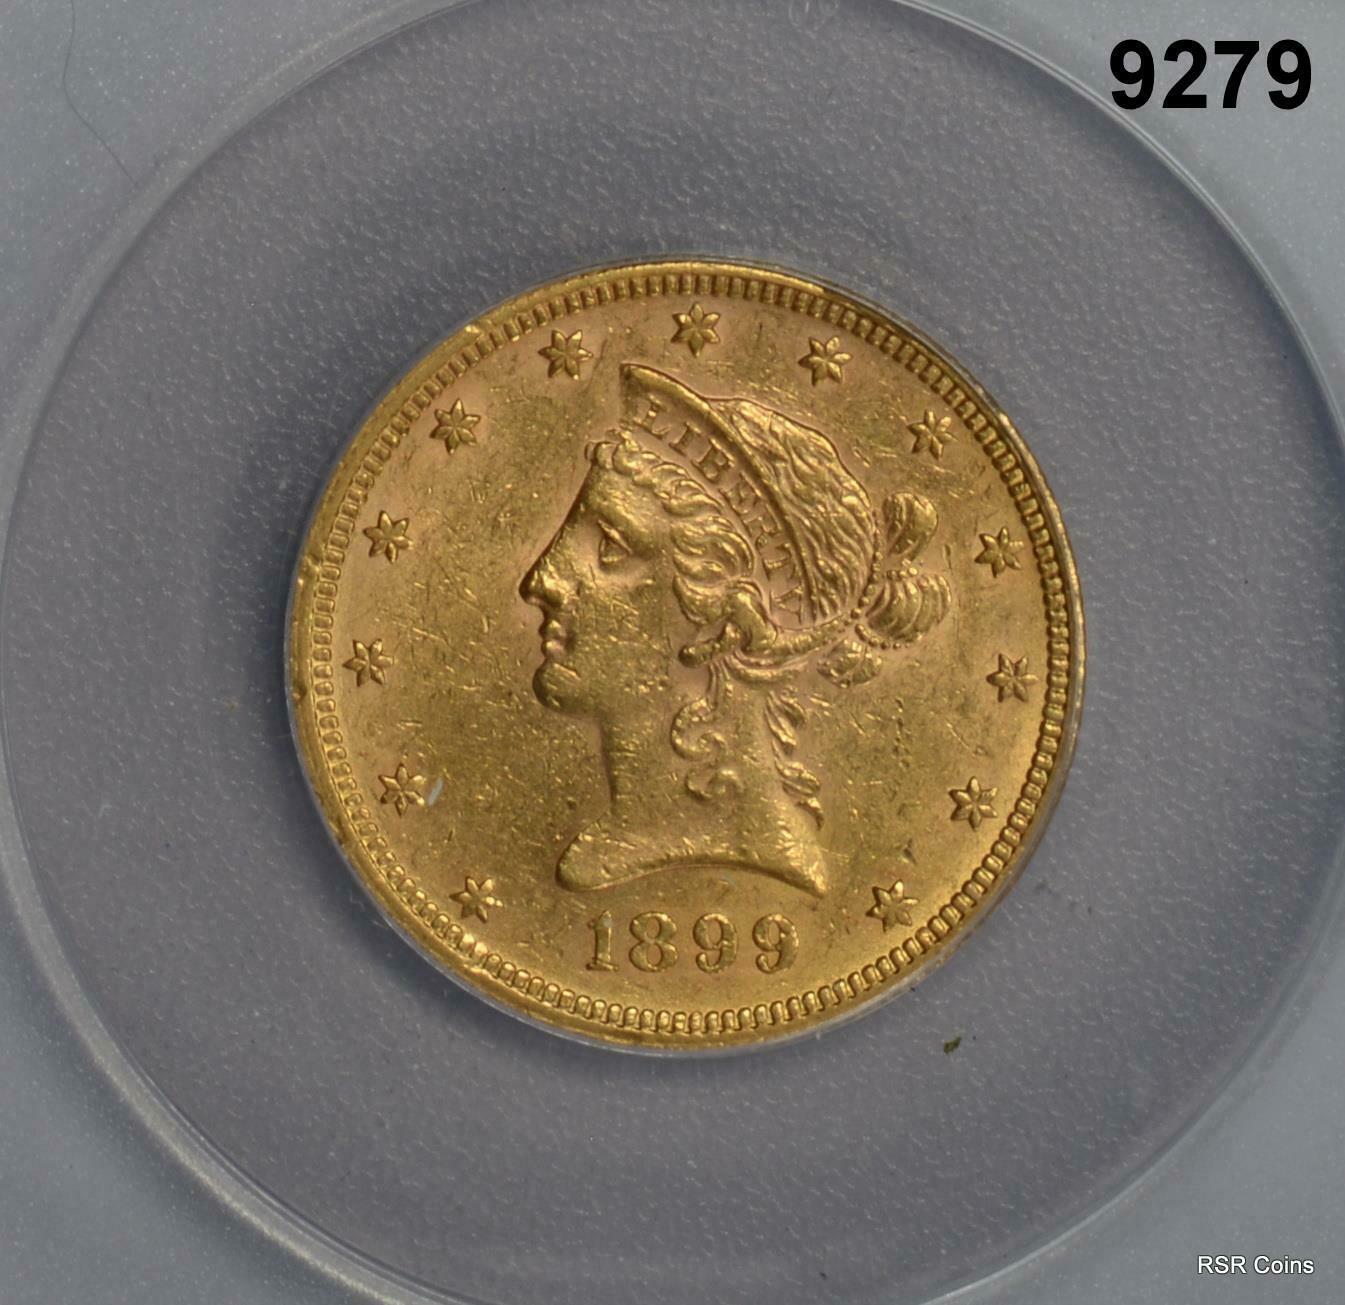 1899 $10 GOLD LIBERTY ANACS CERTIFIED AU58 #9279